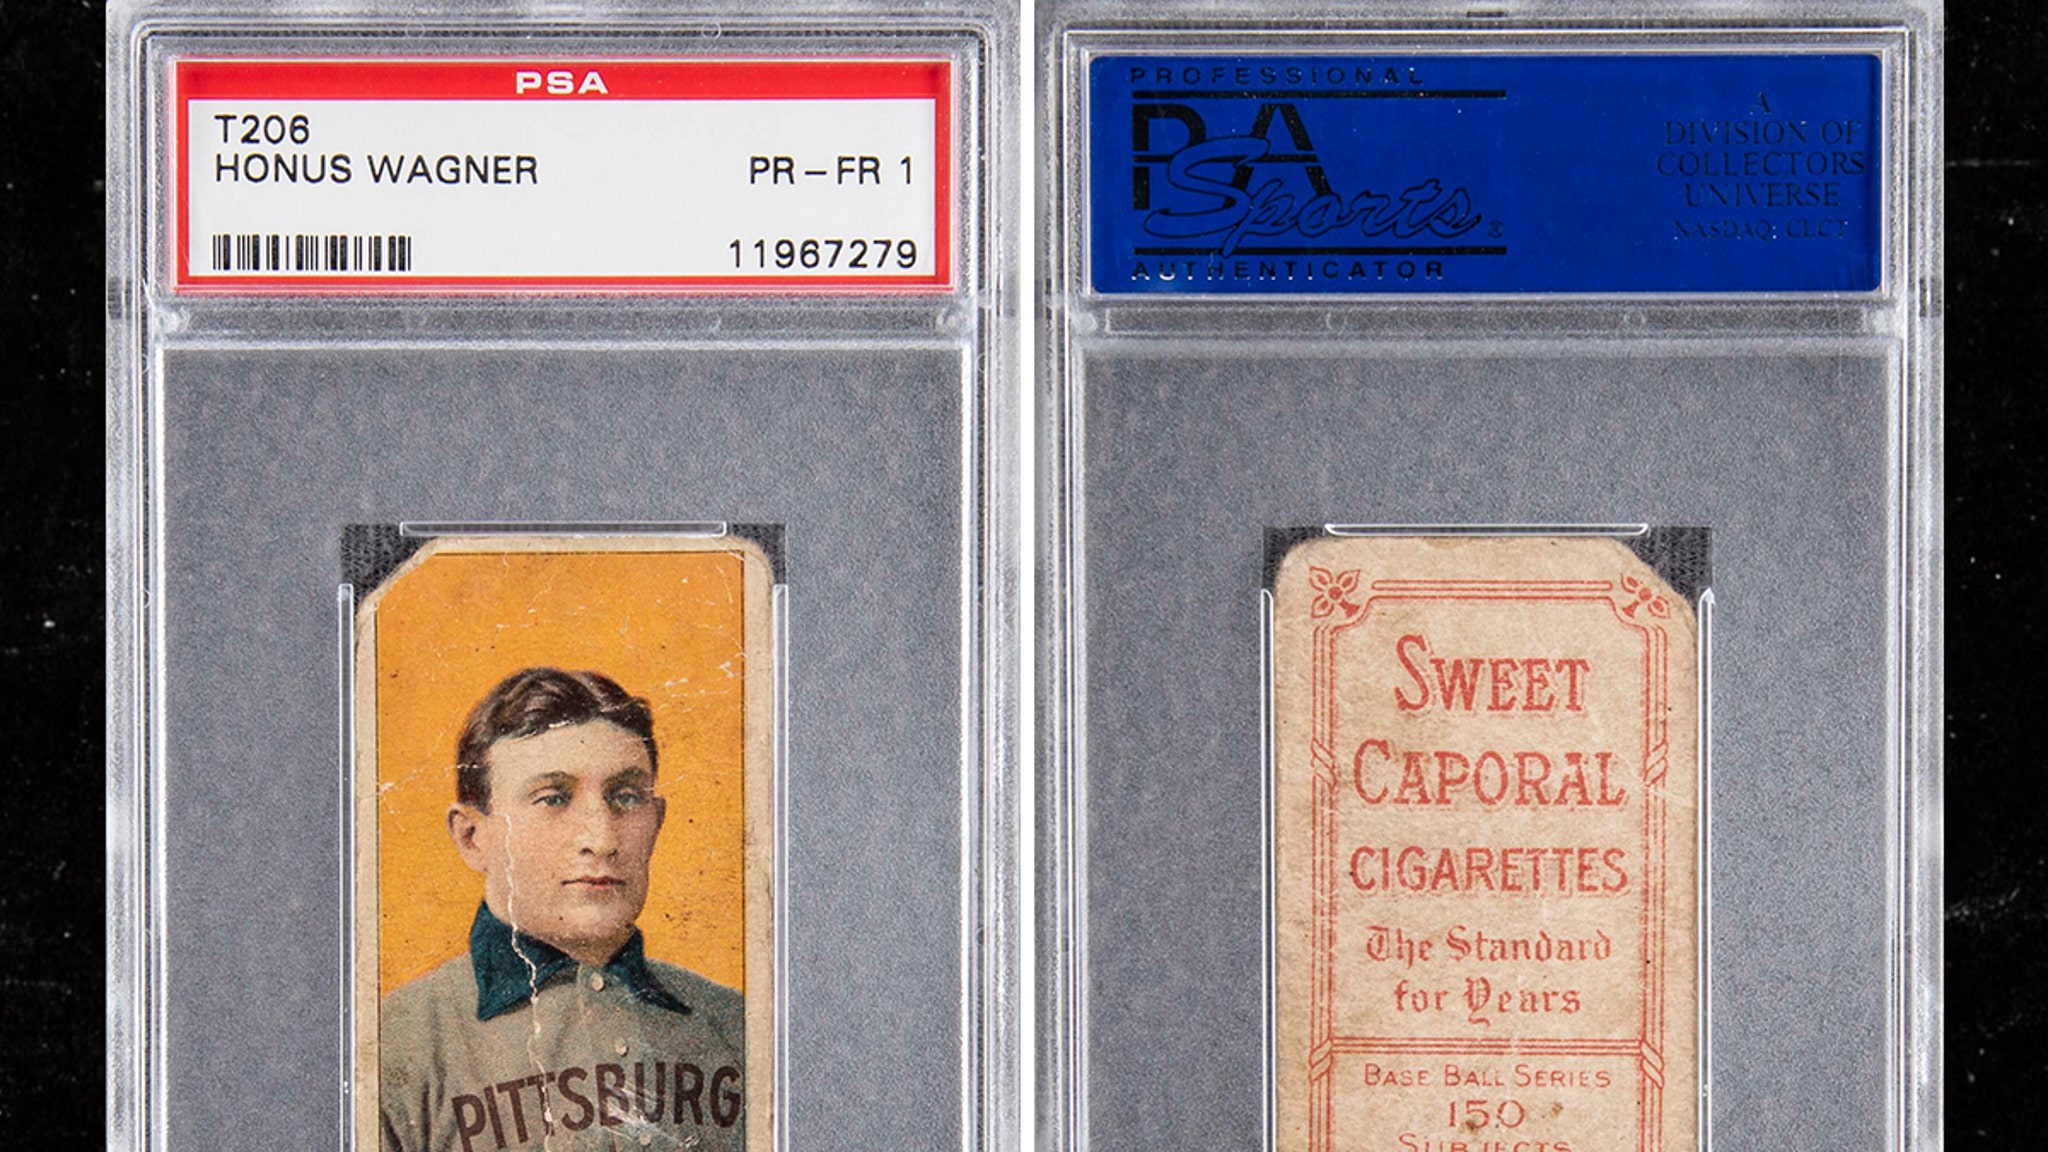 Rare Honus Wagner T206 baseball card sells at auction for $2.1